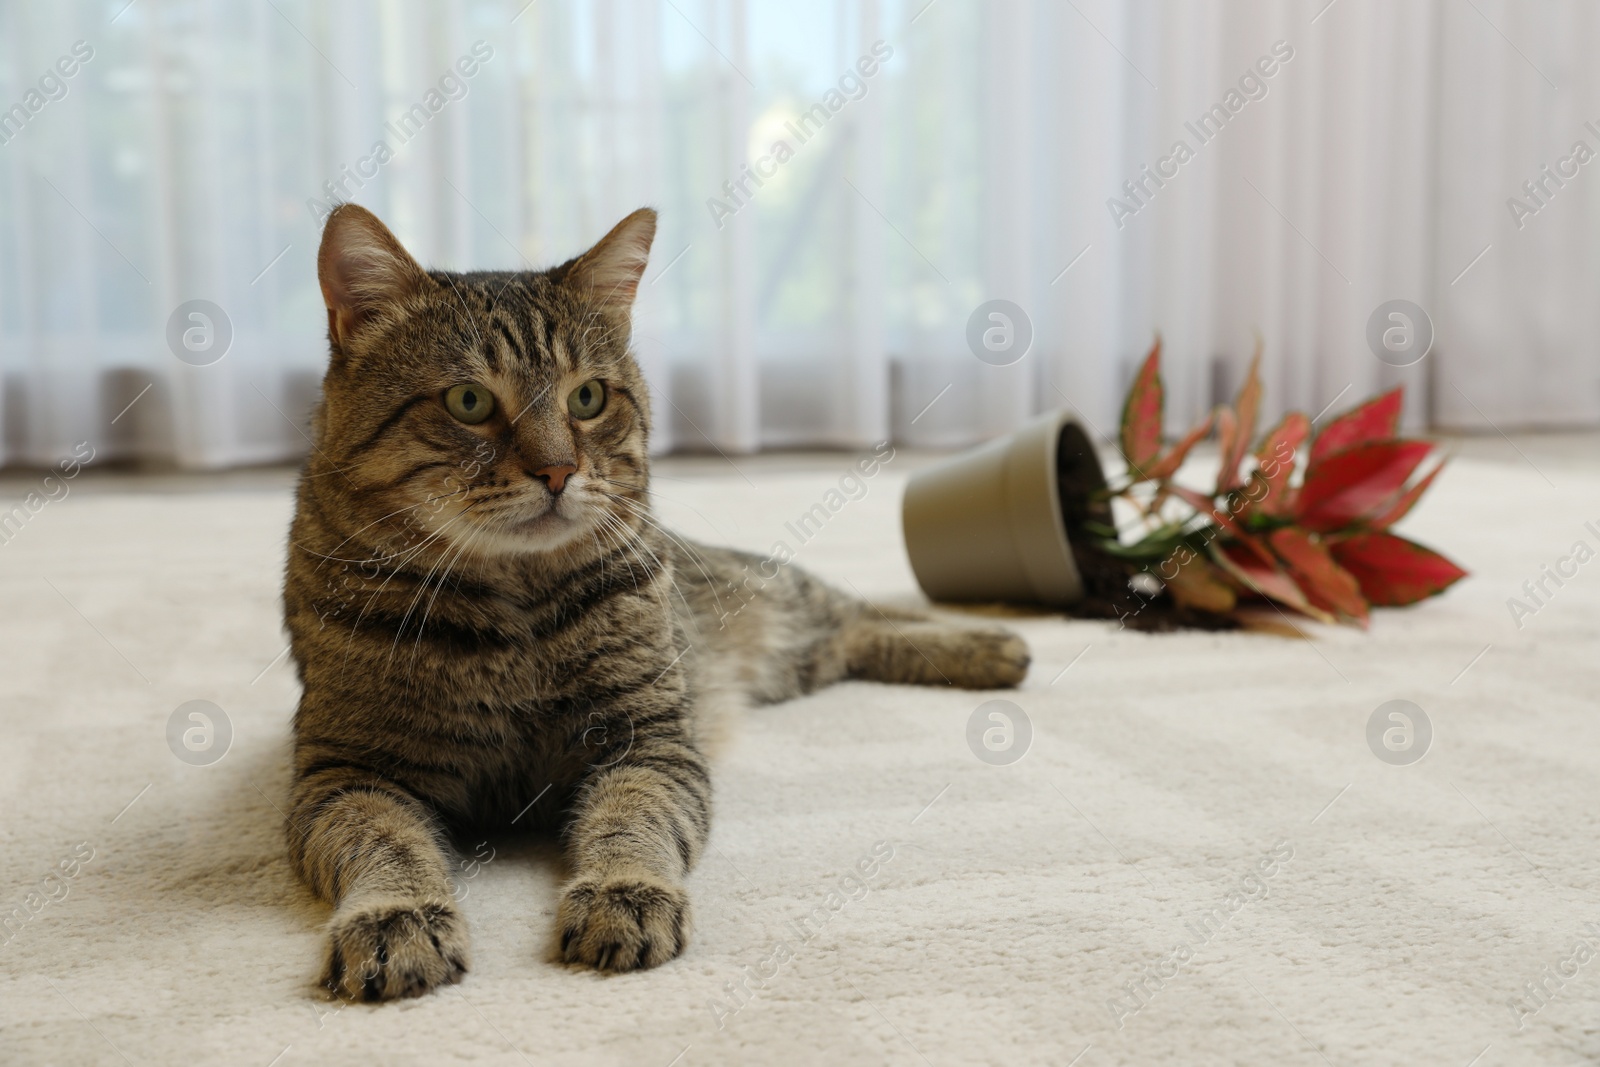 Photo of Mischievous cat near overturned houseplant on carpet indoors